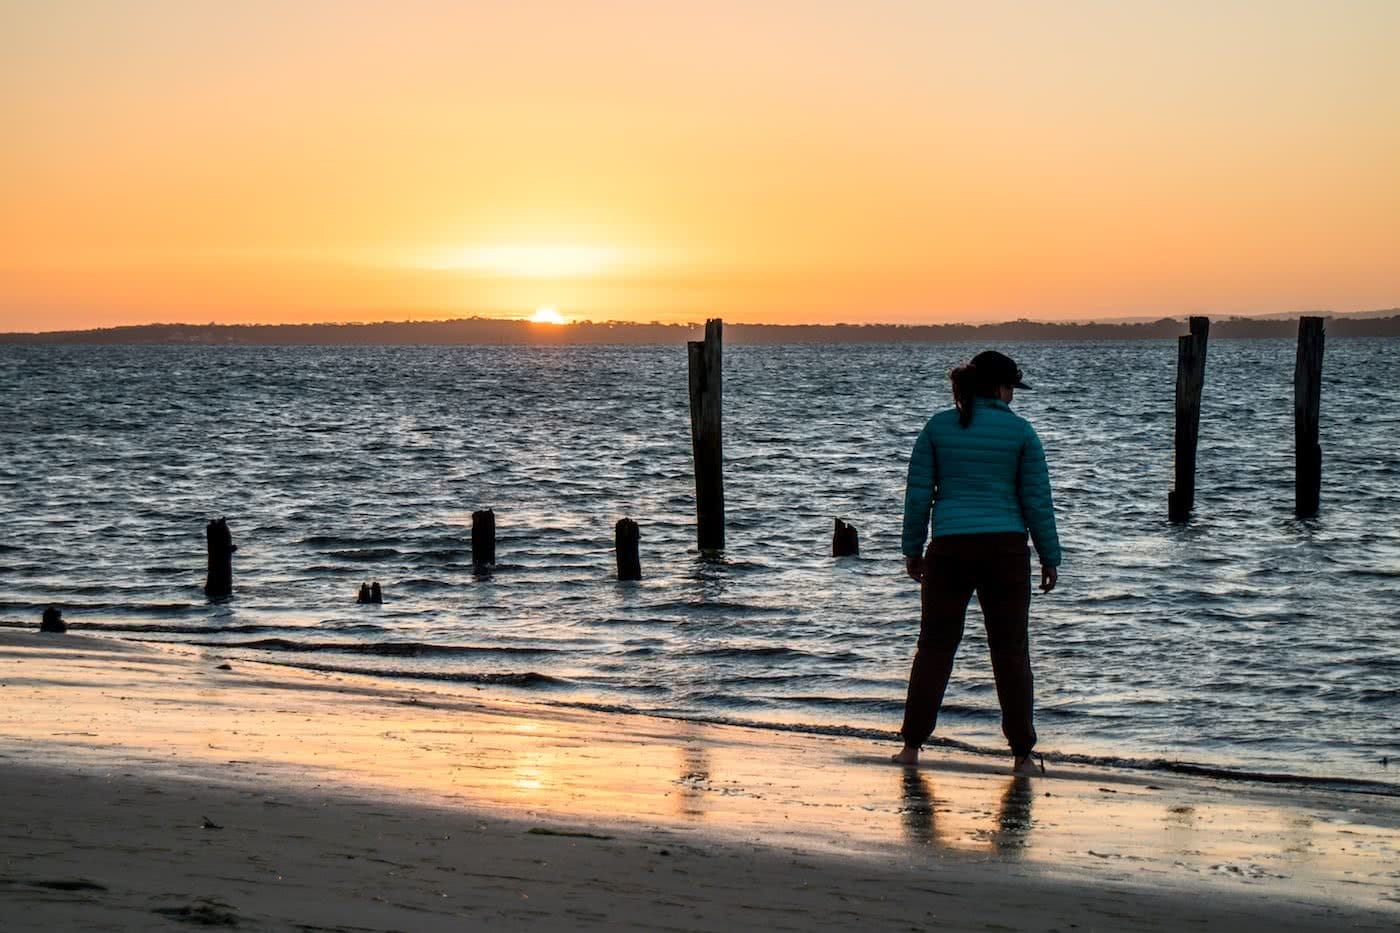 French Island // Melbourne's Wilder Island Adventure, Chris Paola, wreck, sunset, wet sand, orange, standing, ocean